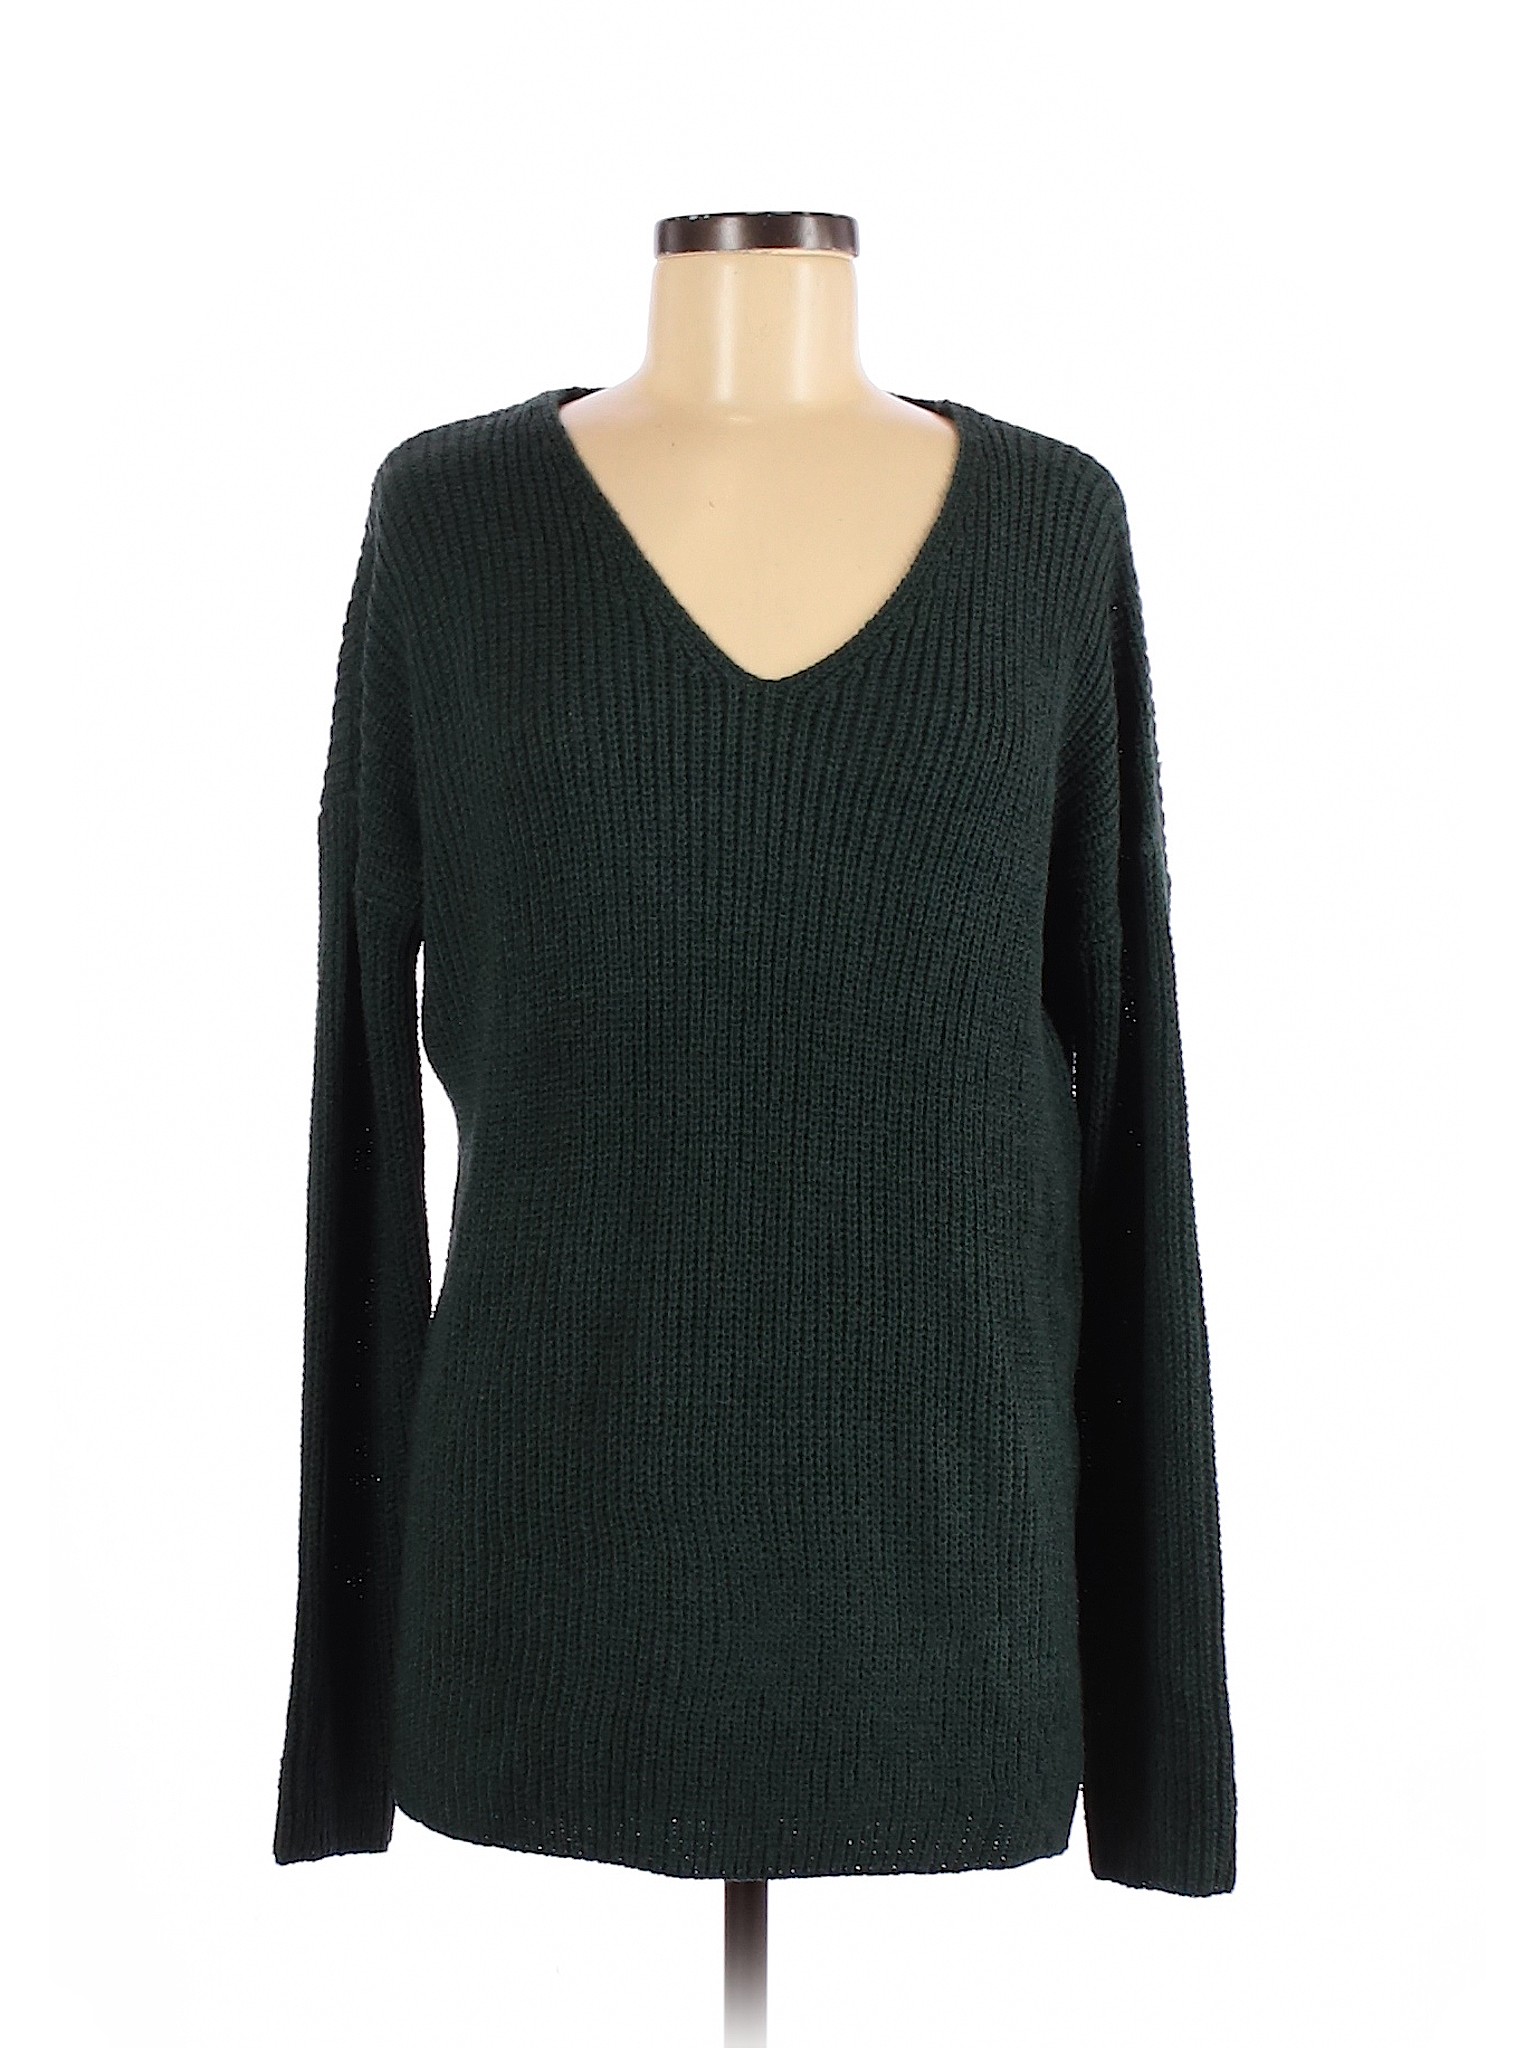 Staccato Women Green Pullover Sweater S | eBay